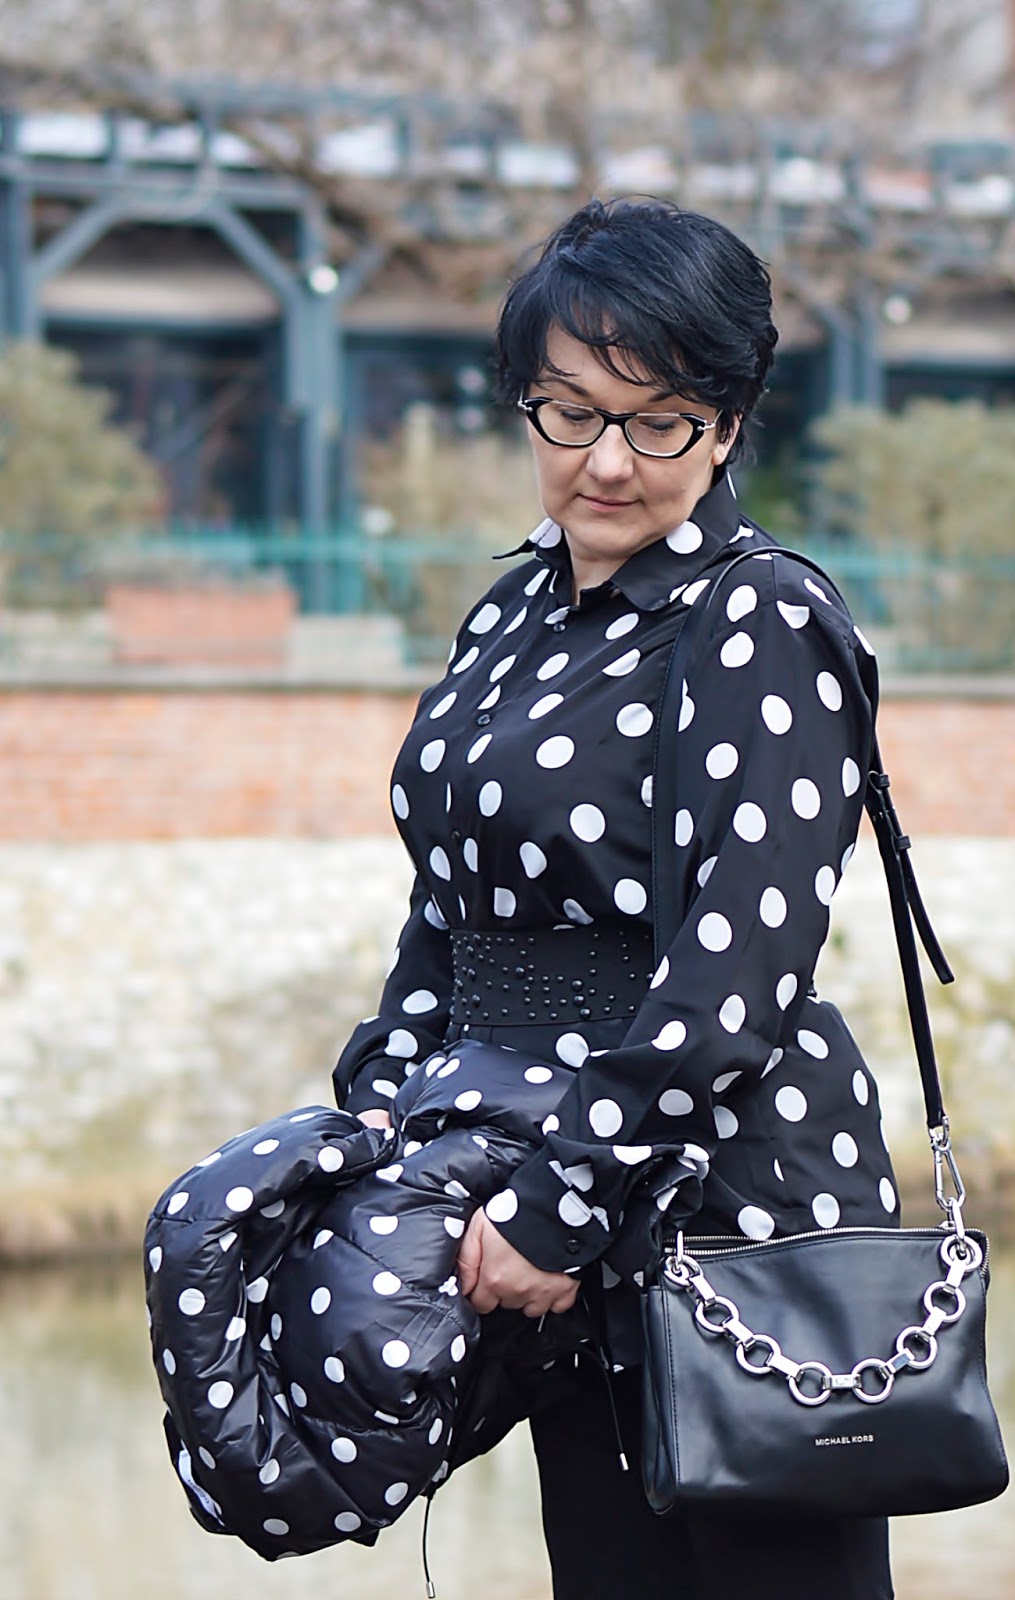 Michael Kors bag, polka dots, black and white style